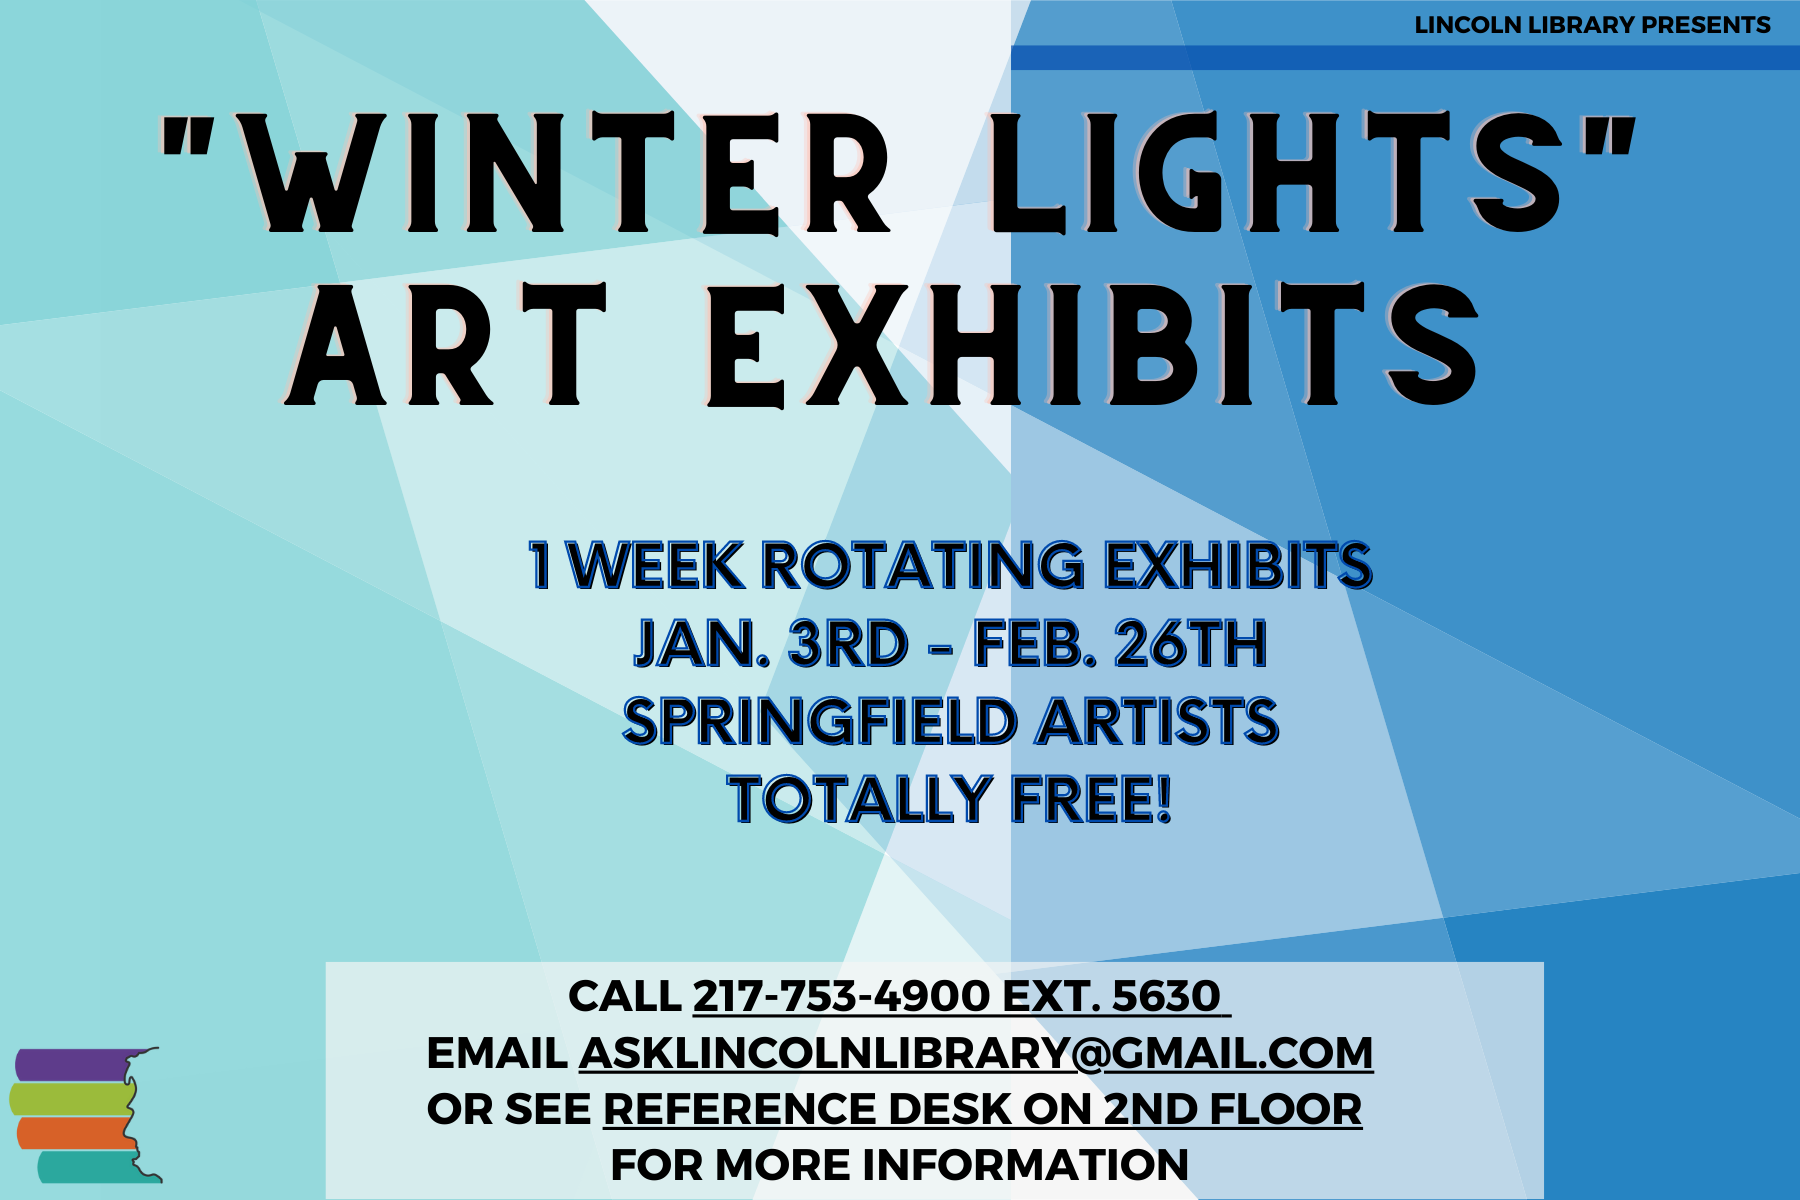 Winter Lights Art Exhibits, 1 Week Rotating Exhibits January 3 - February 26. Totally Free!